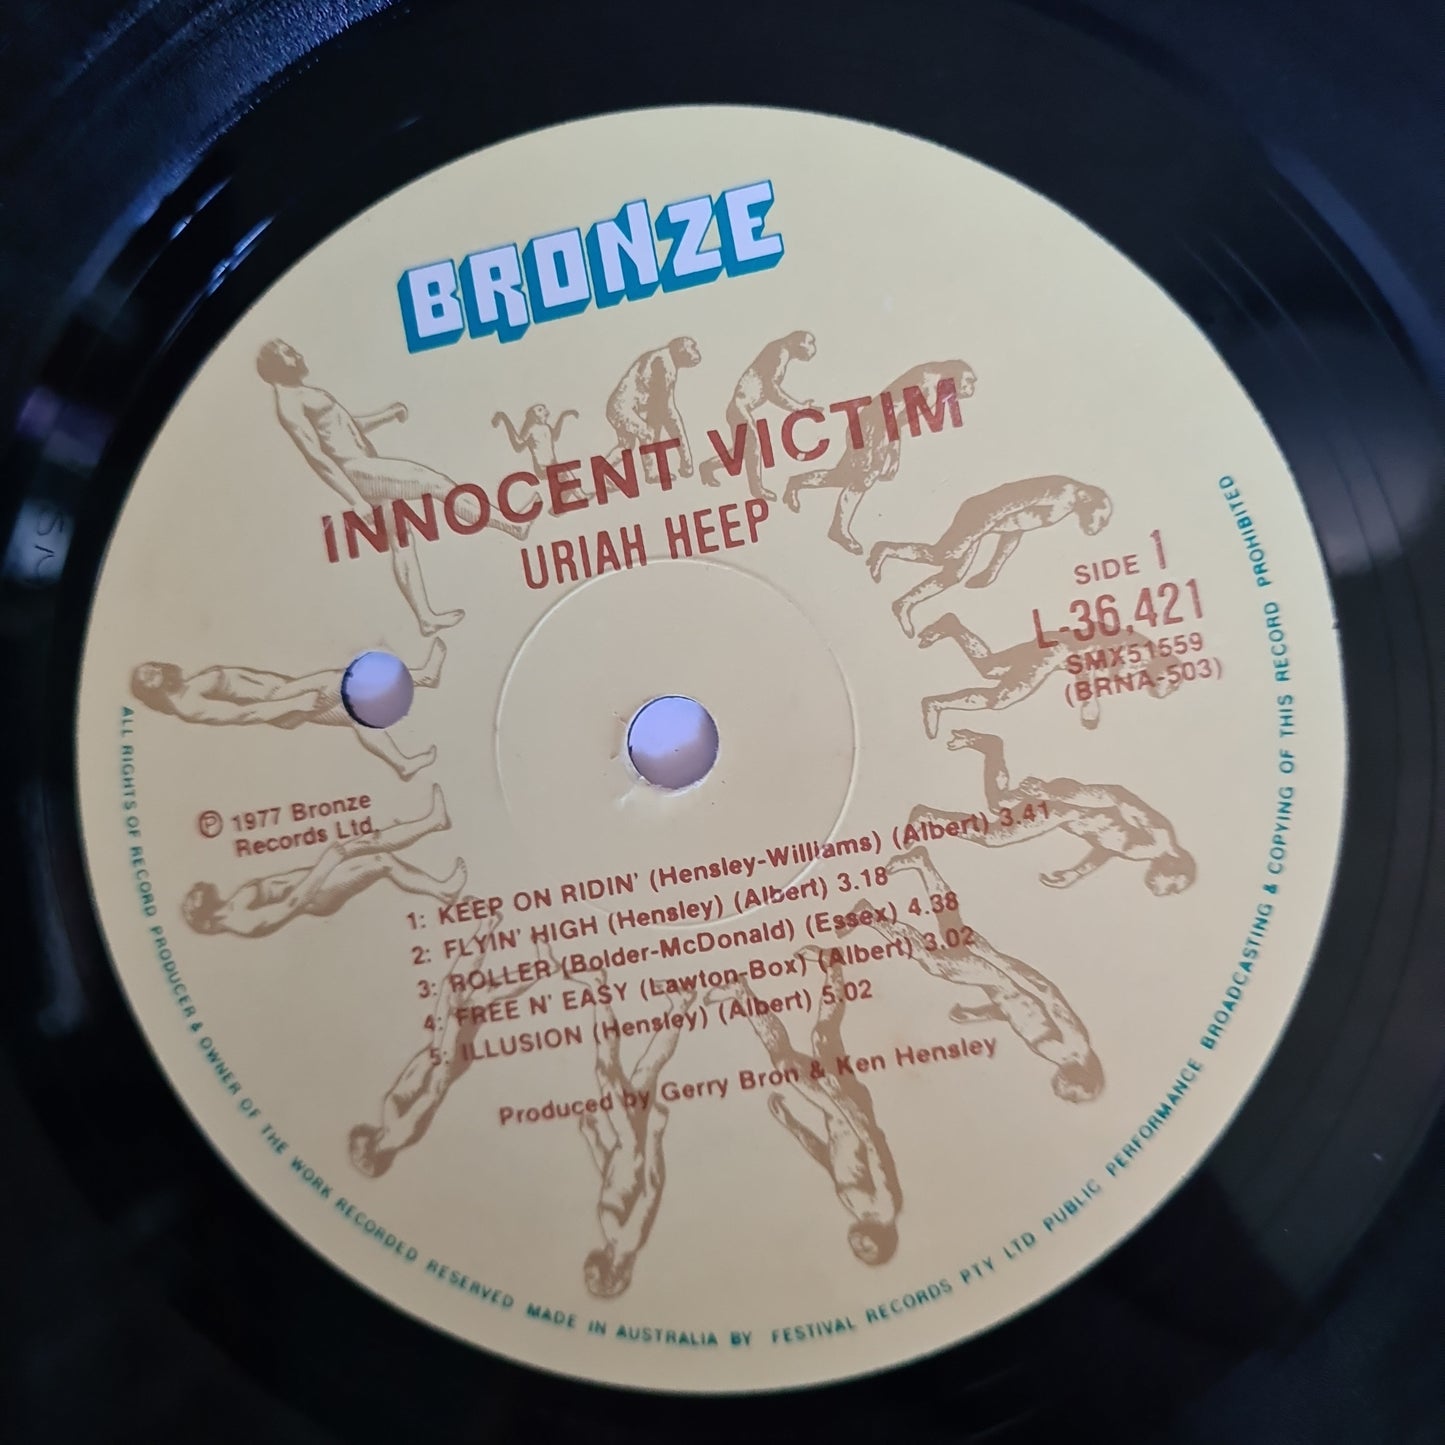 Uriah Heep – Innocent Victim - 1977 - Vinyl Record